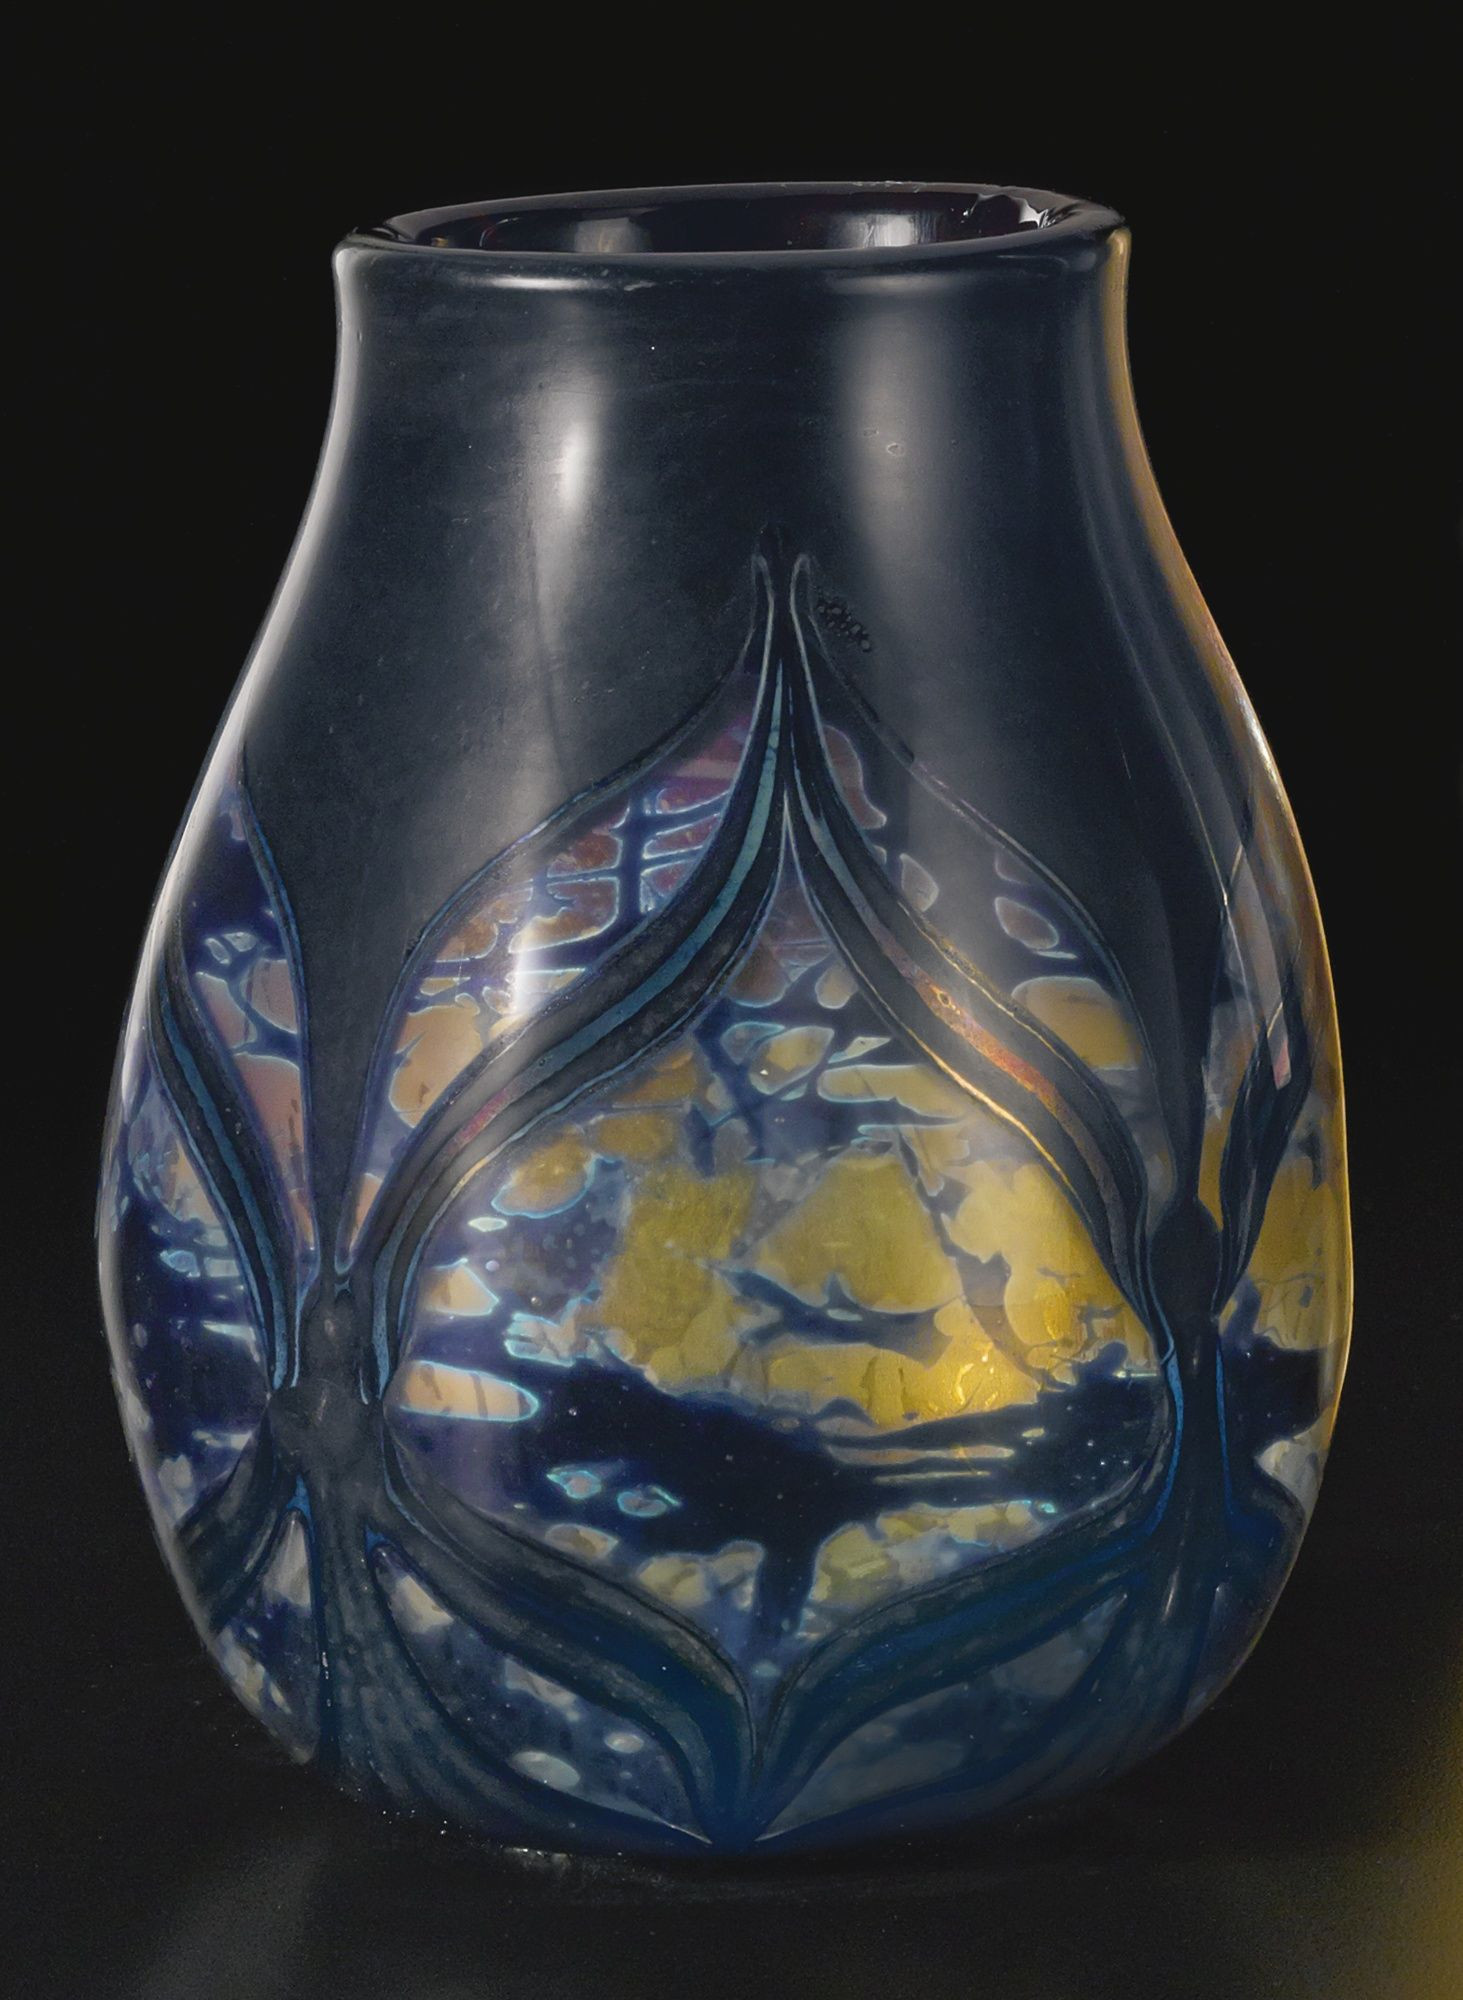 Tiffany and Co Glass Vase Of Tiffany Studios New York Iridescent Favrile Glass Vase Tiffany Intended for Tiffany Studios New York Iridescent Favrile Glass Vase